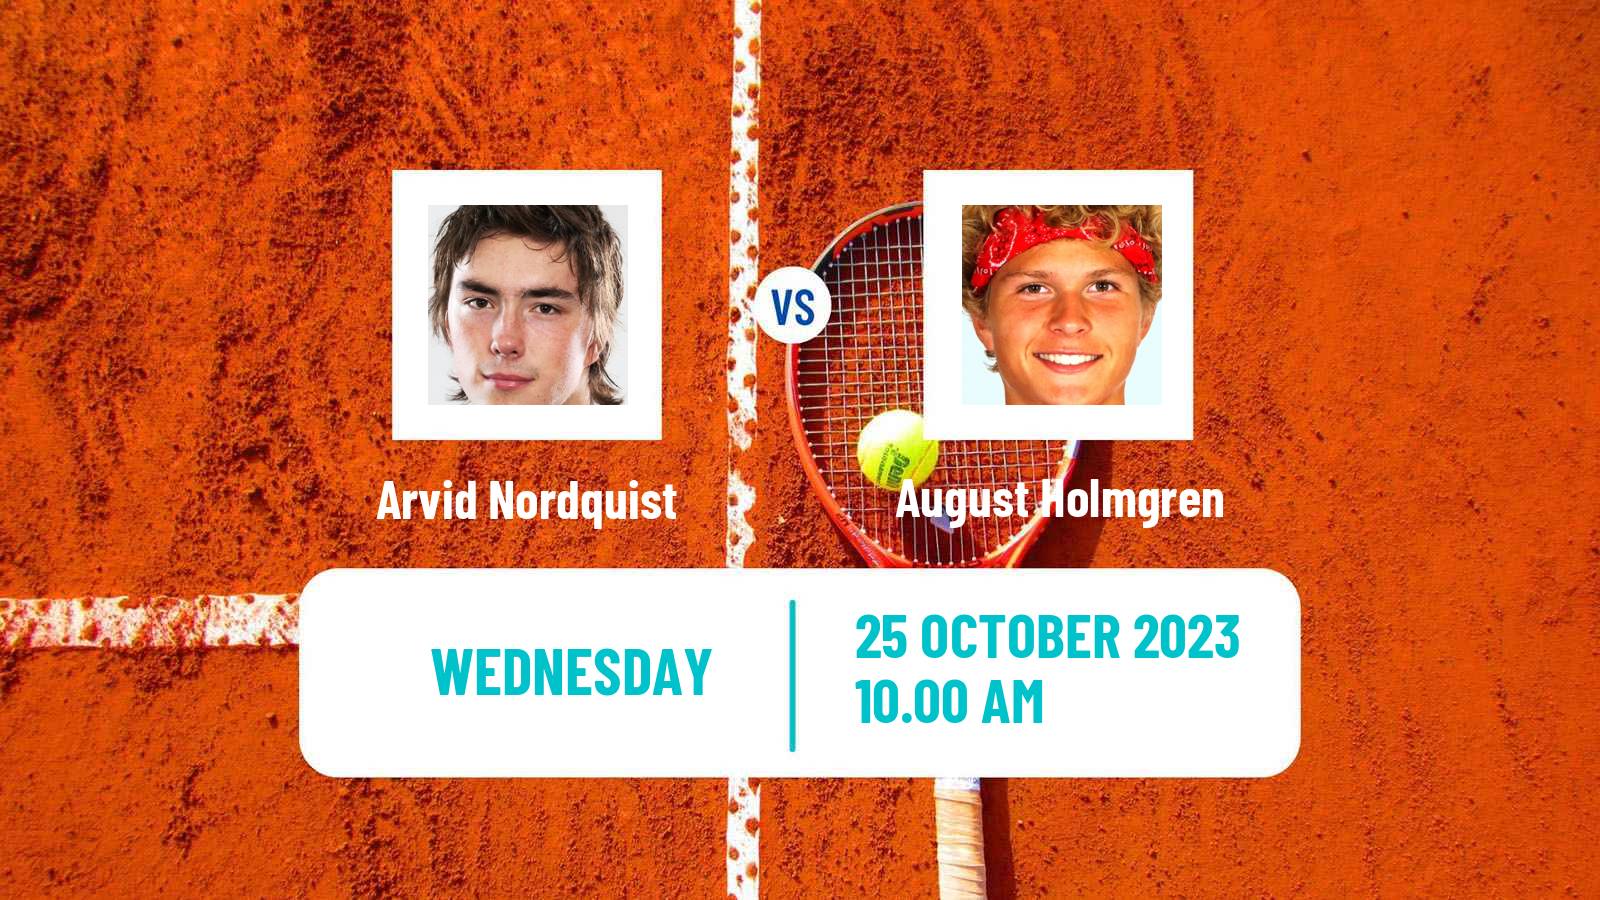 Tennis ITF M25 Harlingen Tx Men Arvid Nordquist - August Holmgren